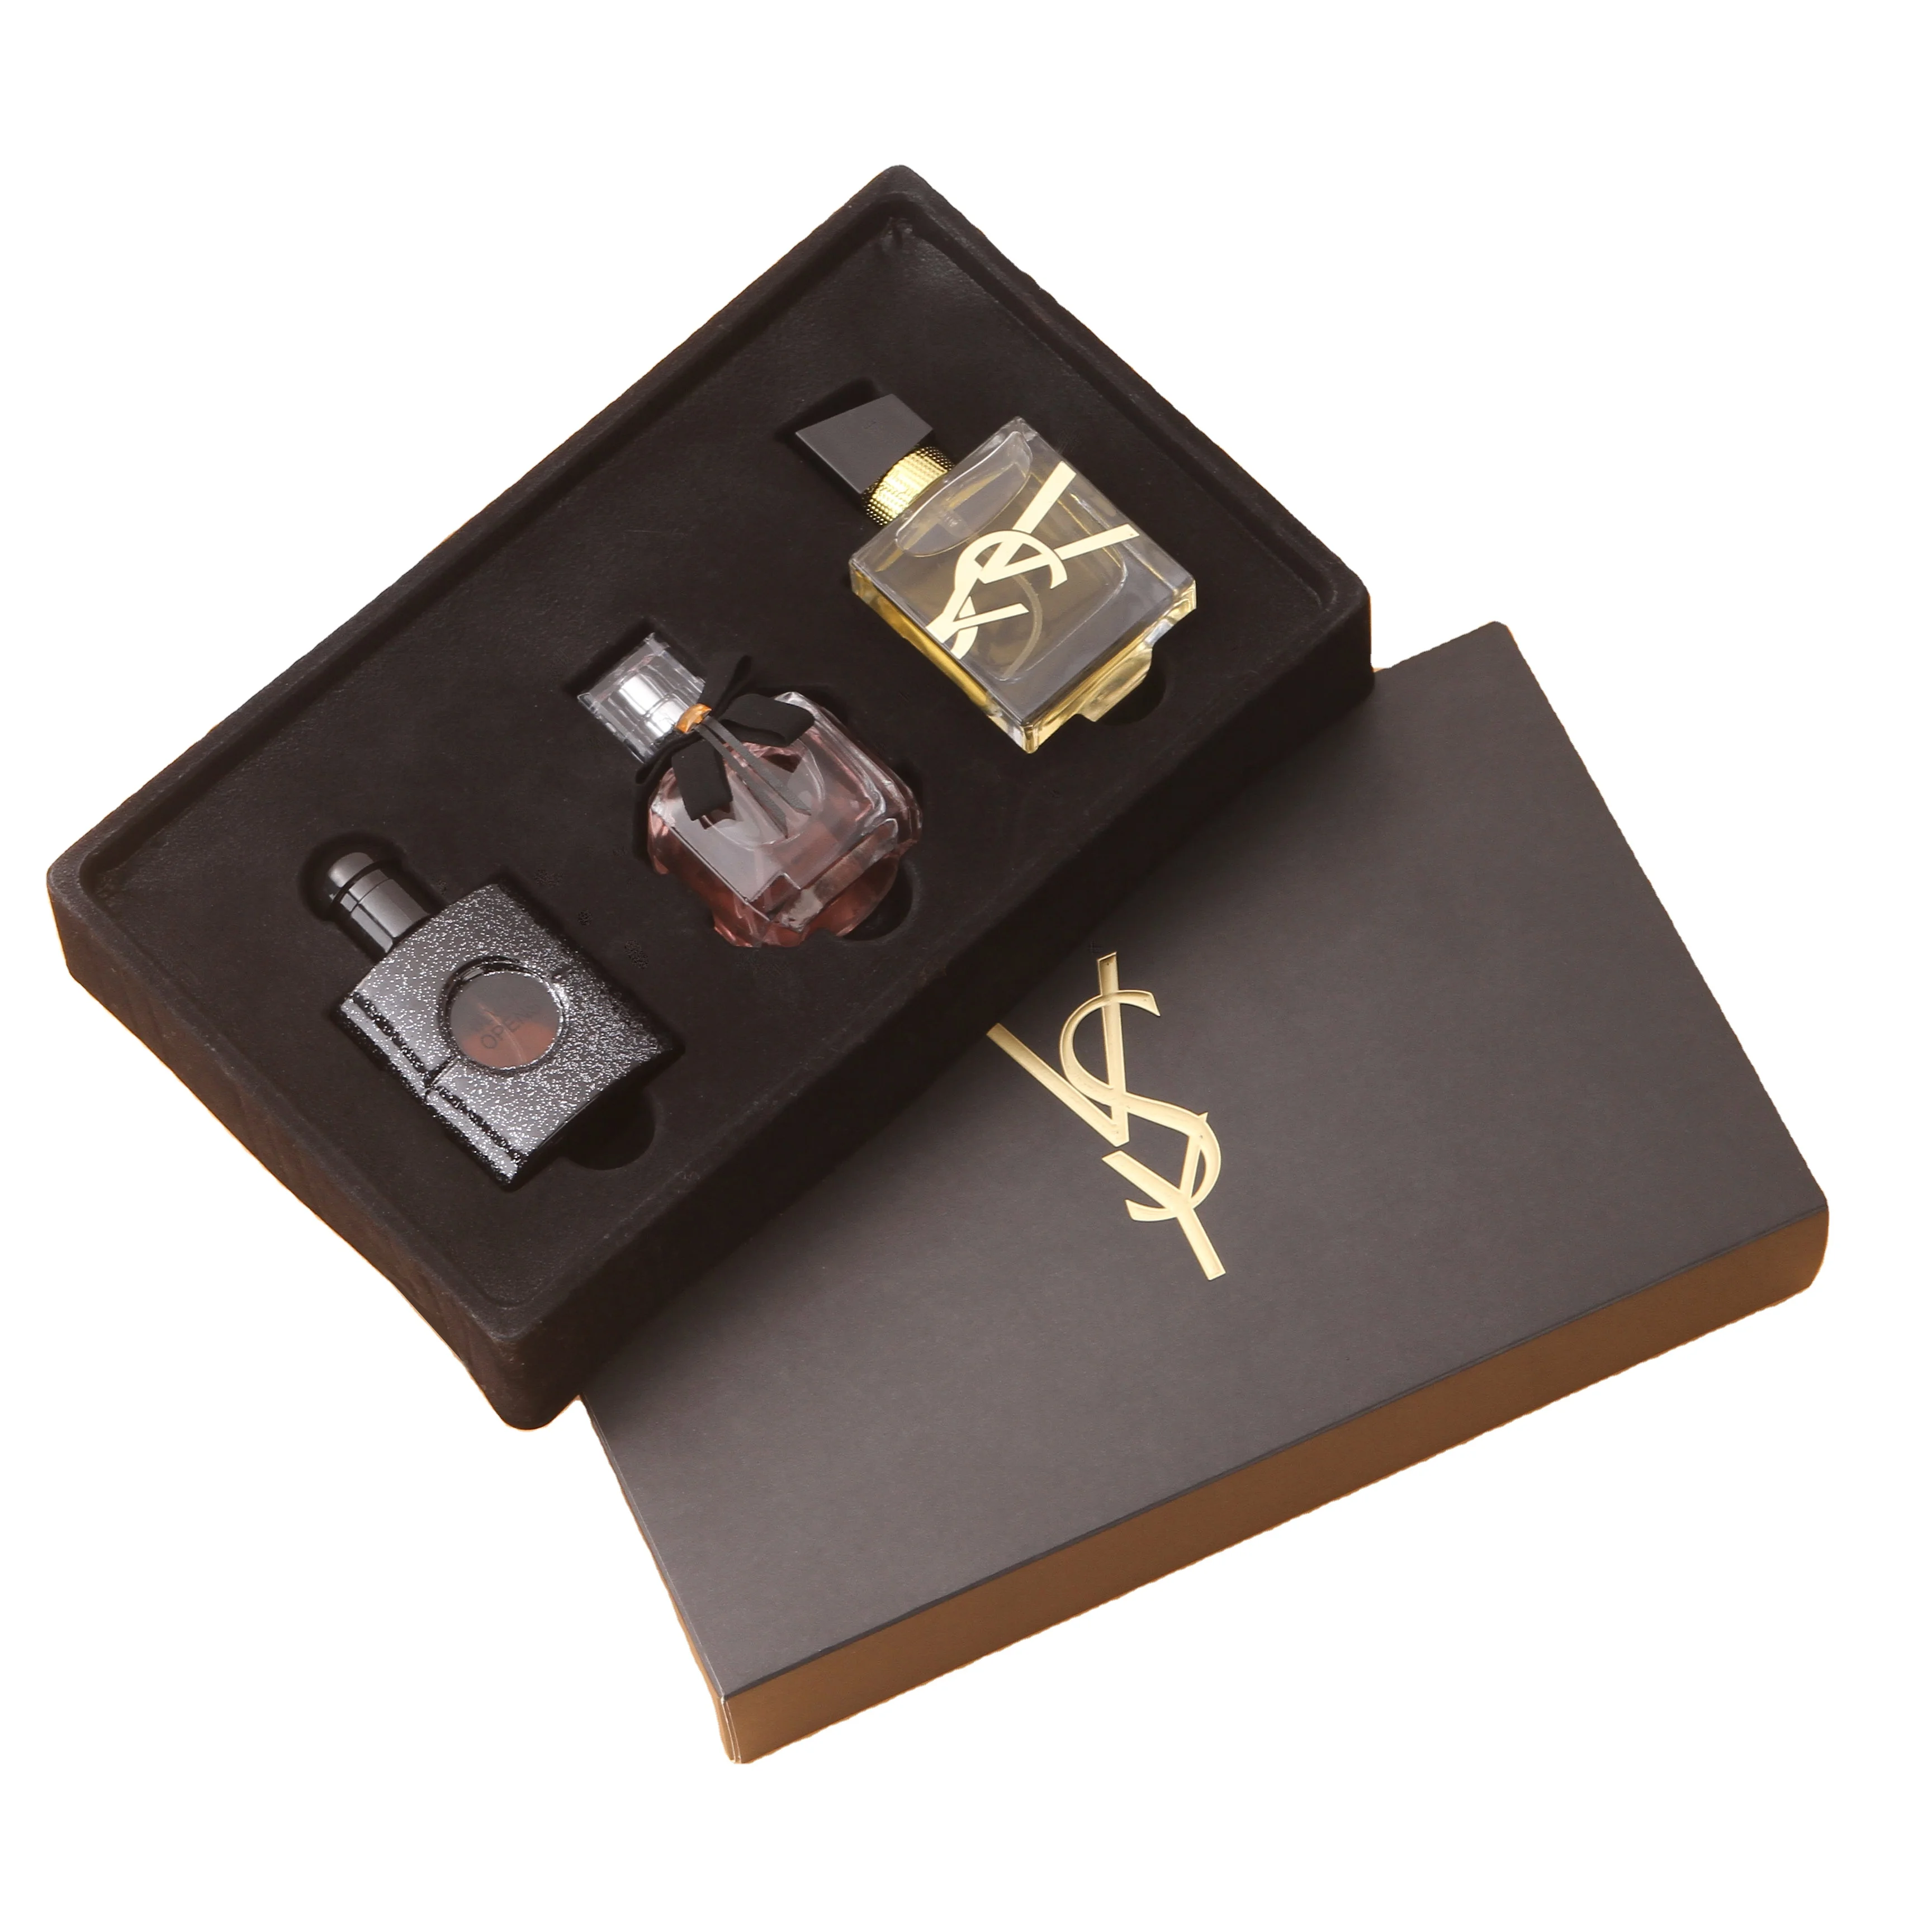 Chinese perfume ladies mini set gift box perfume bottle packaging size 30ml perfume (1600448507112)